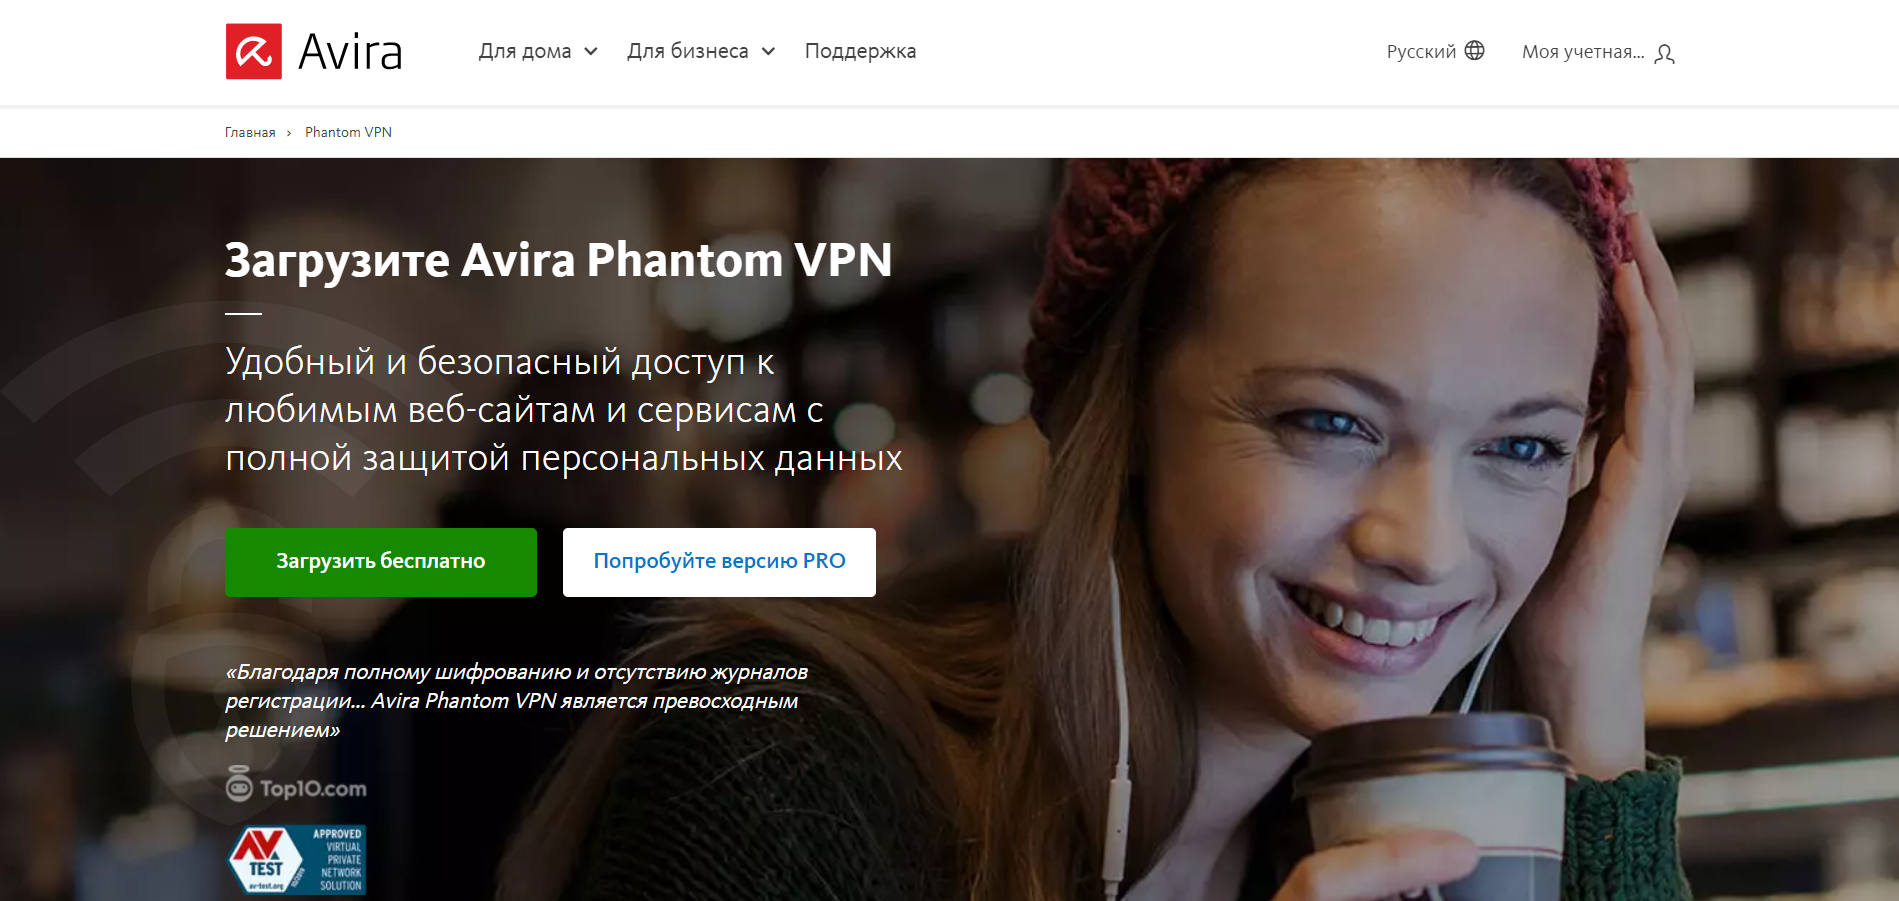 Avira Phantom VPN сервис для Mac и iPhone